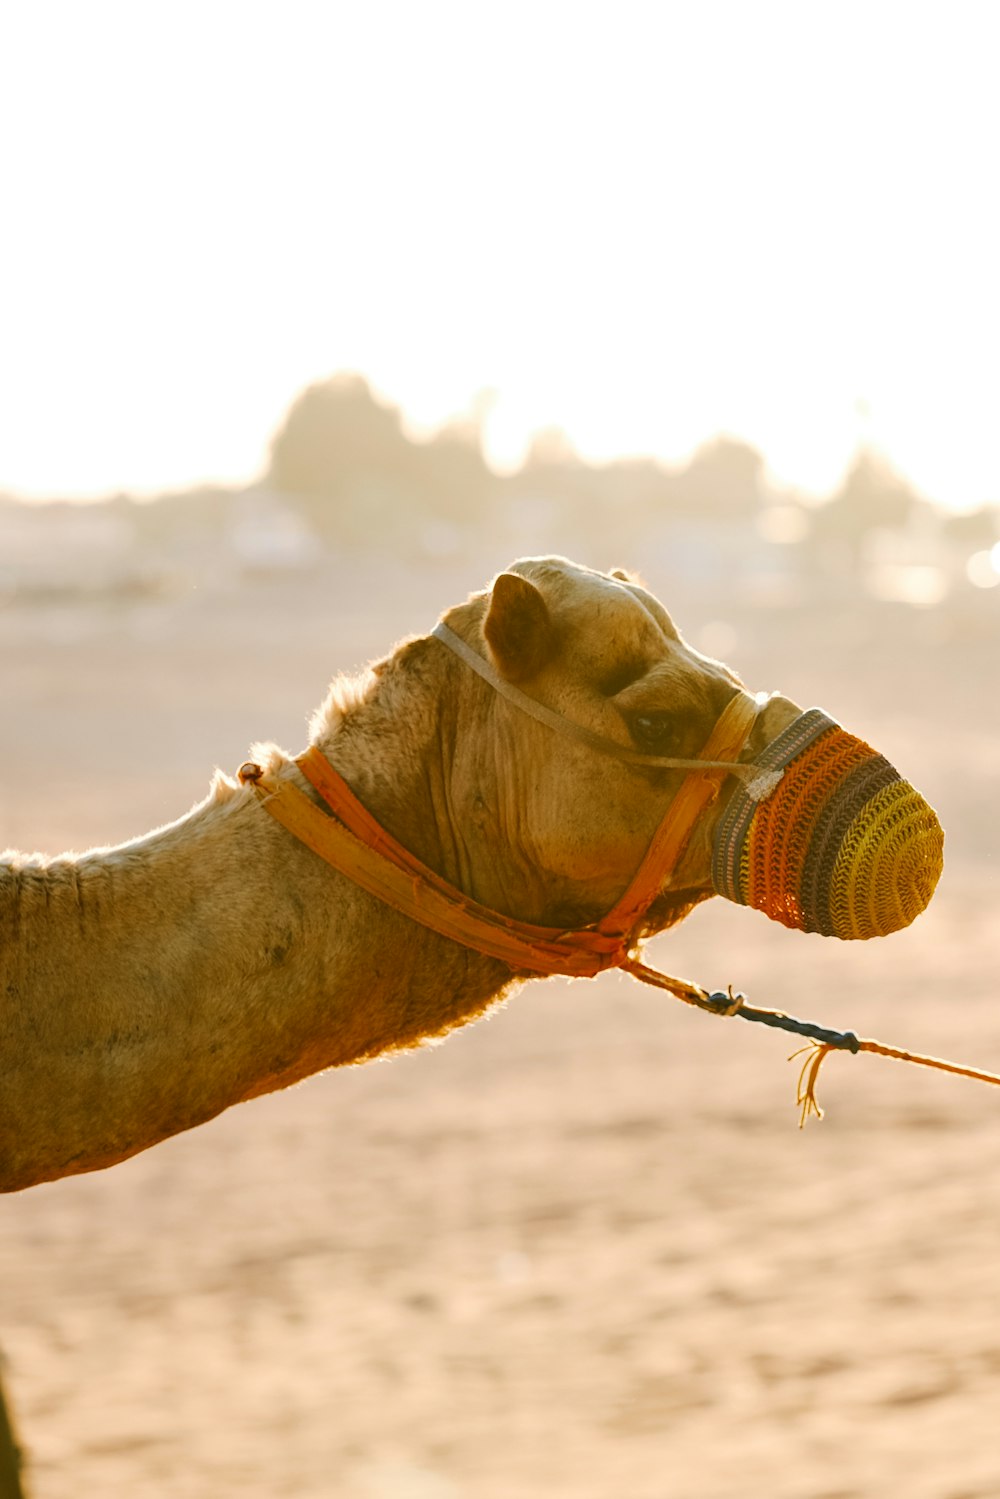 a close up of a camel on a beach